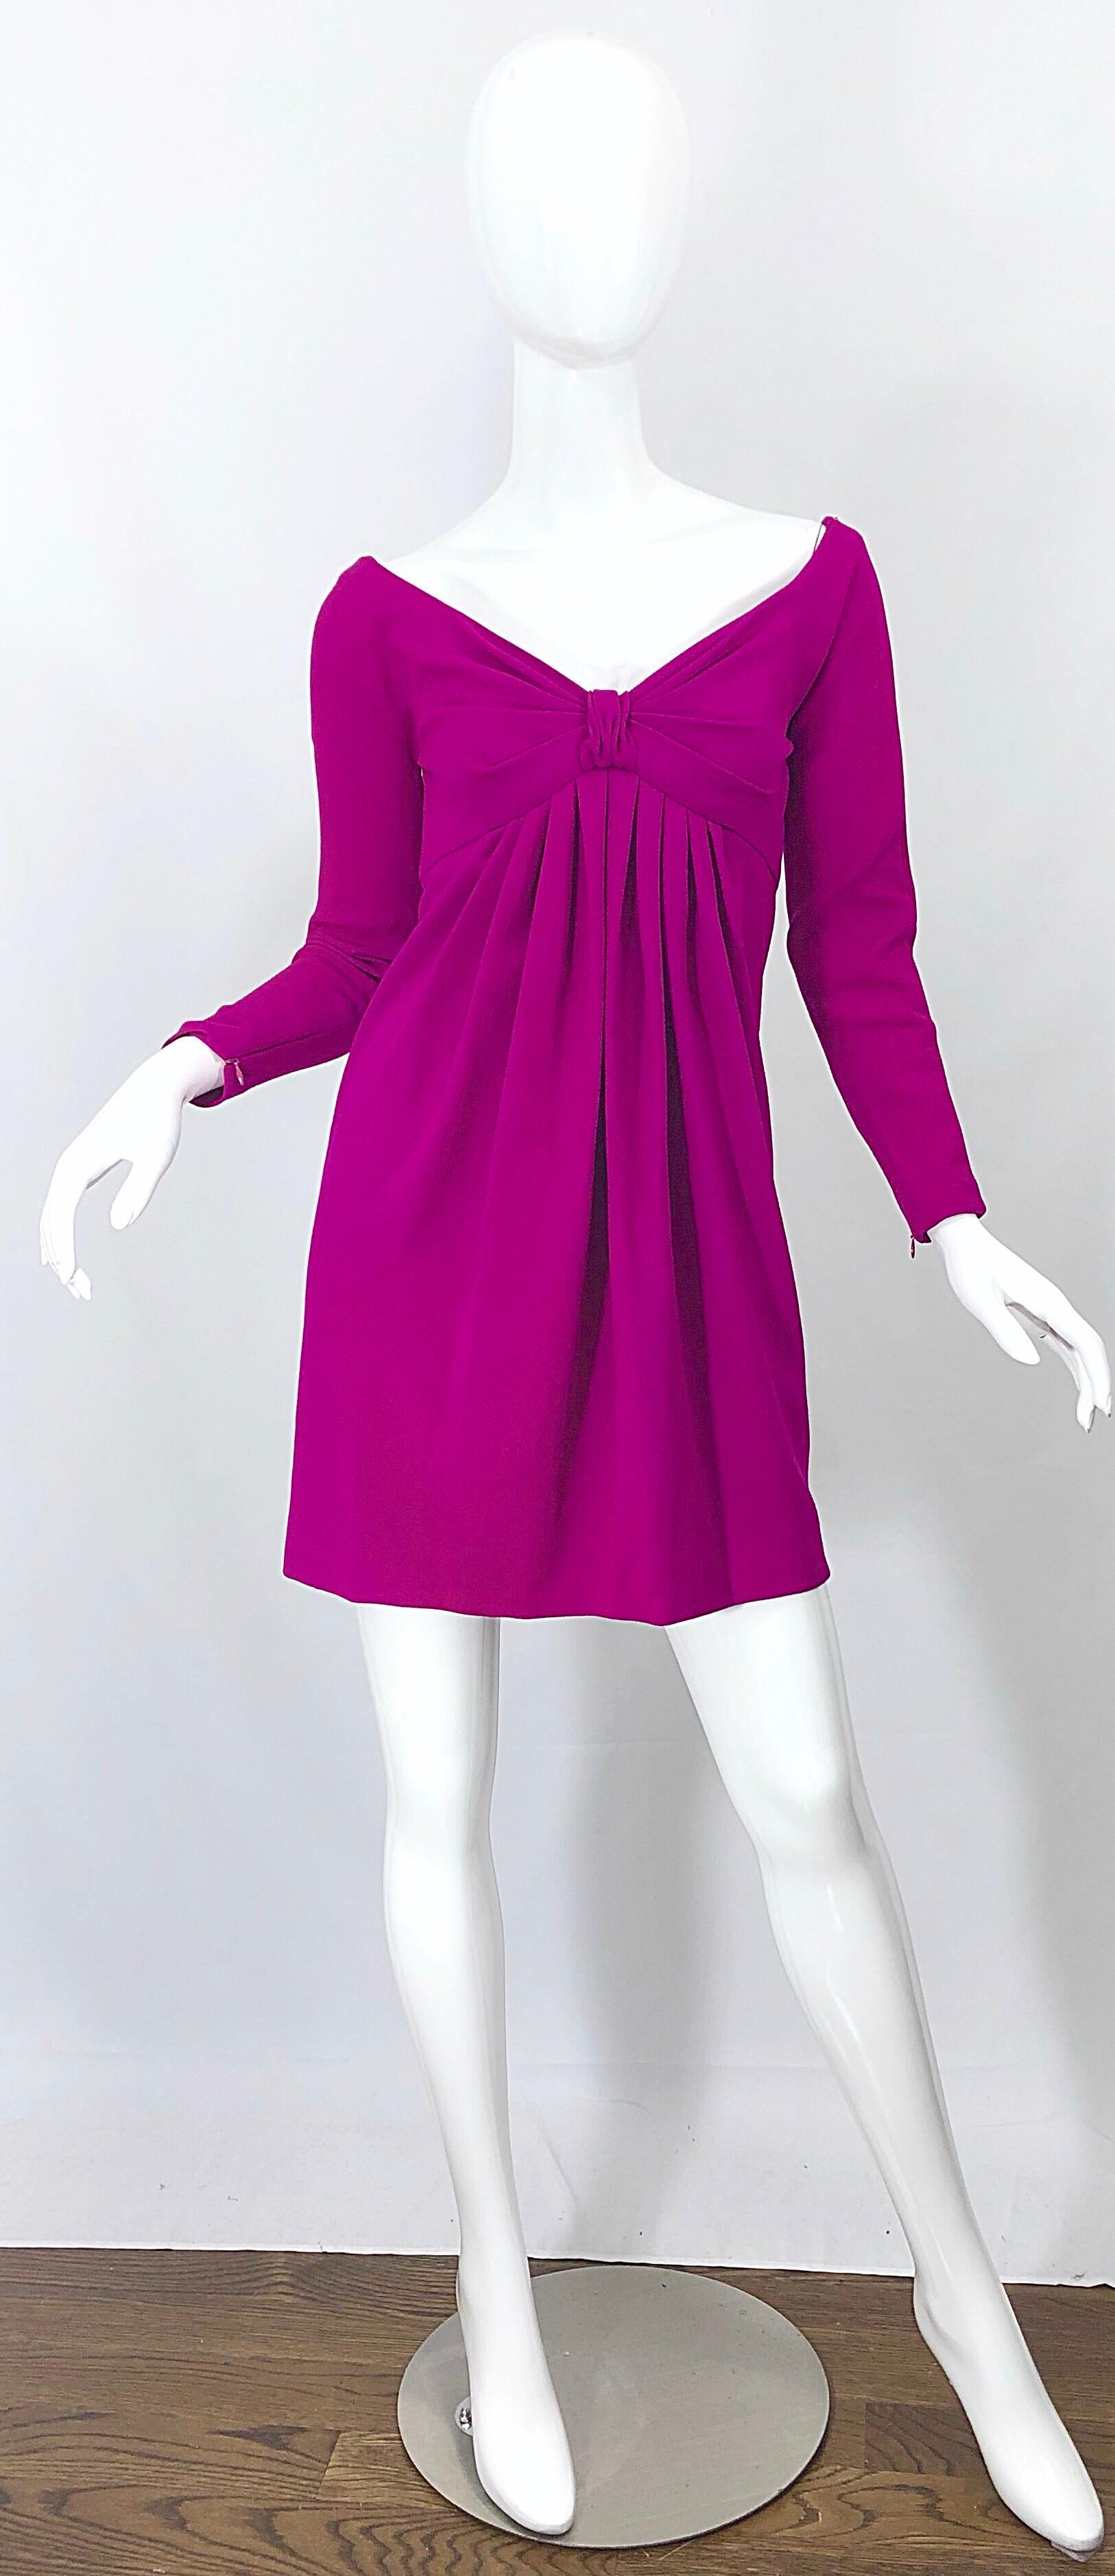 Carolyne Roehm 1990s Fuchsia Hot Pink Wool Vintage 90s Mini Empire Dress For Sale 9